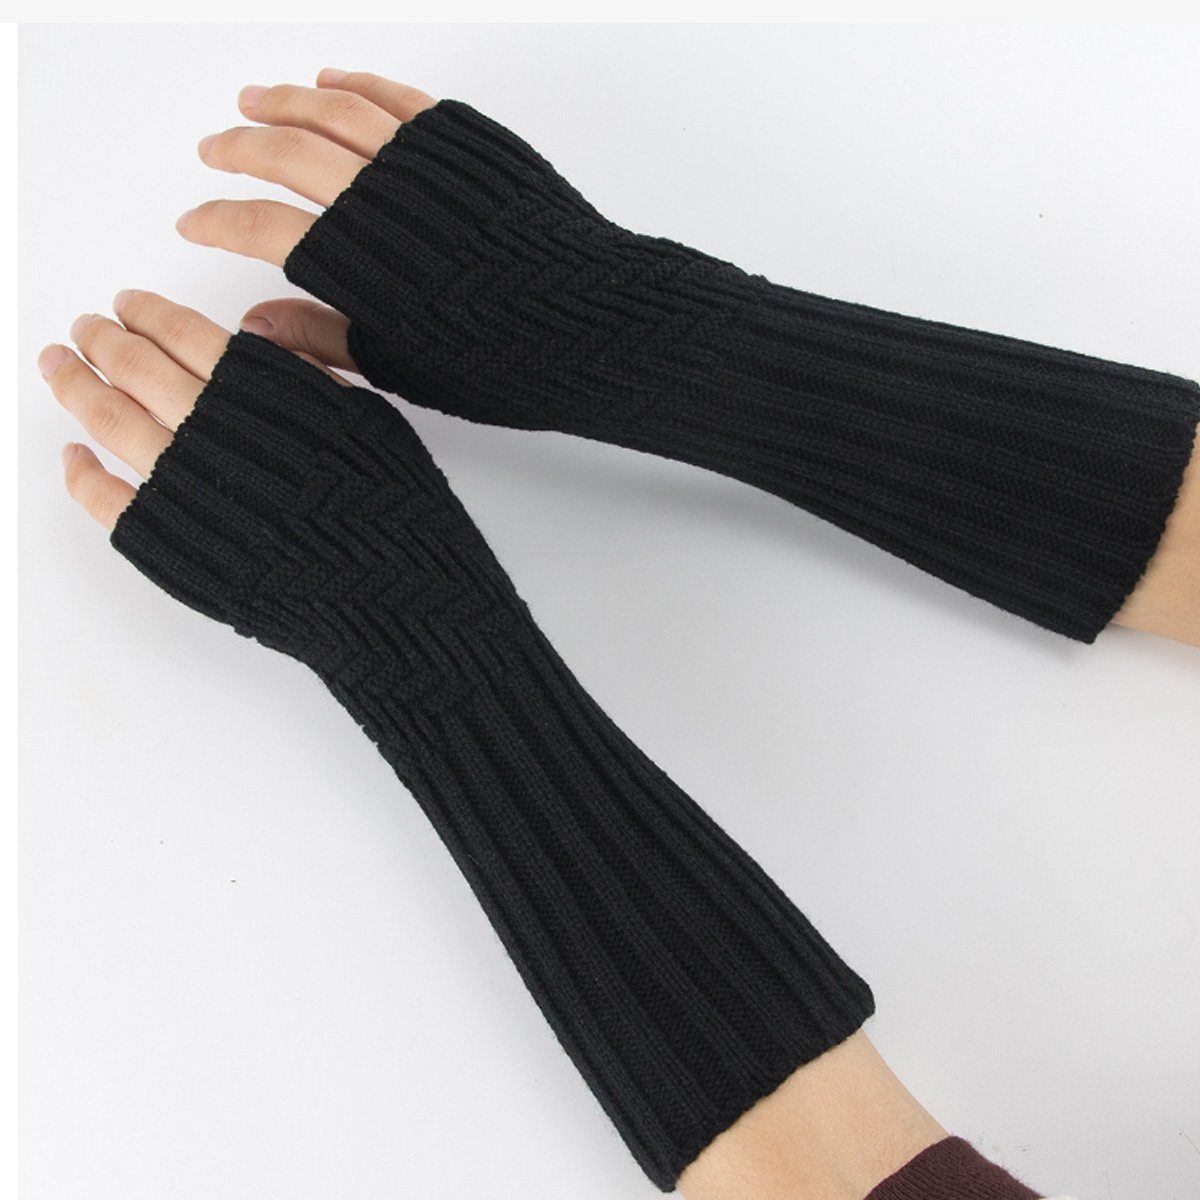 Ärmel,kurze warme Winter Damen Jormftte Strickhandschuhe Fingerlose Schwarz Handschuhe,winter Strick,für